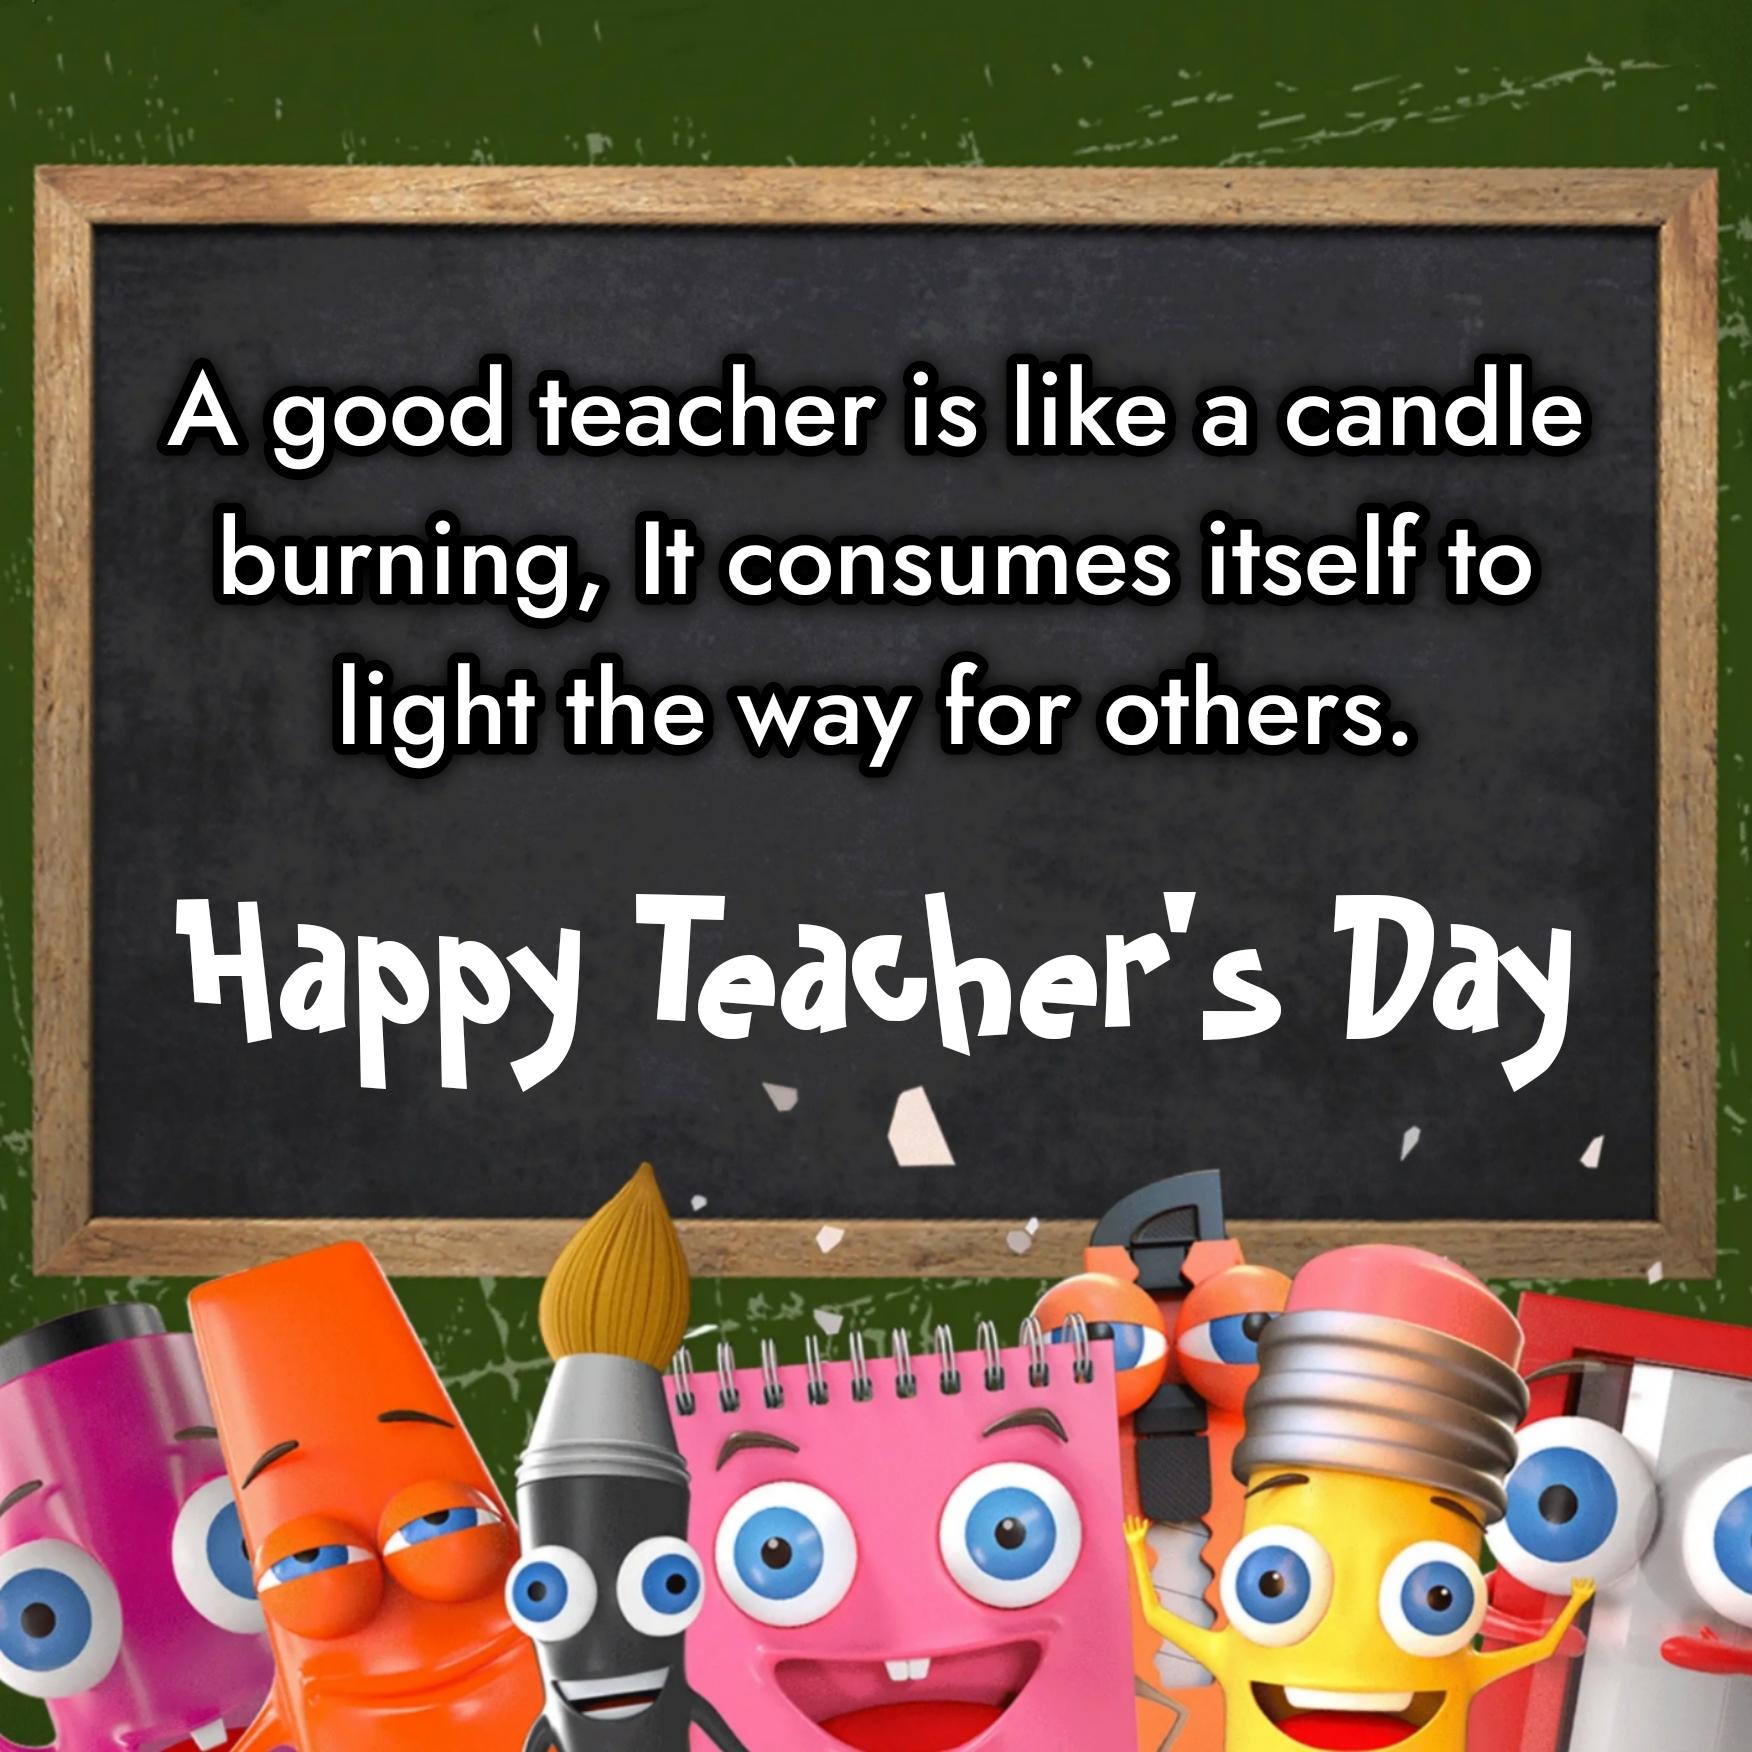 A good teacher is like a candle burning